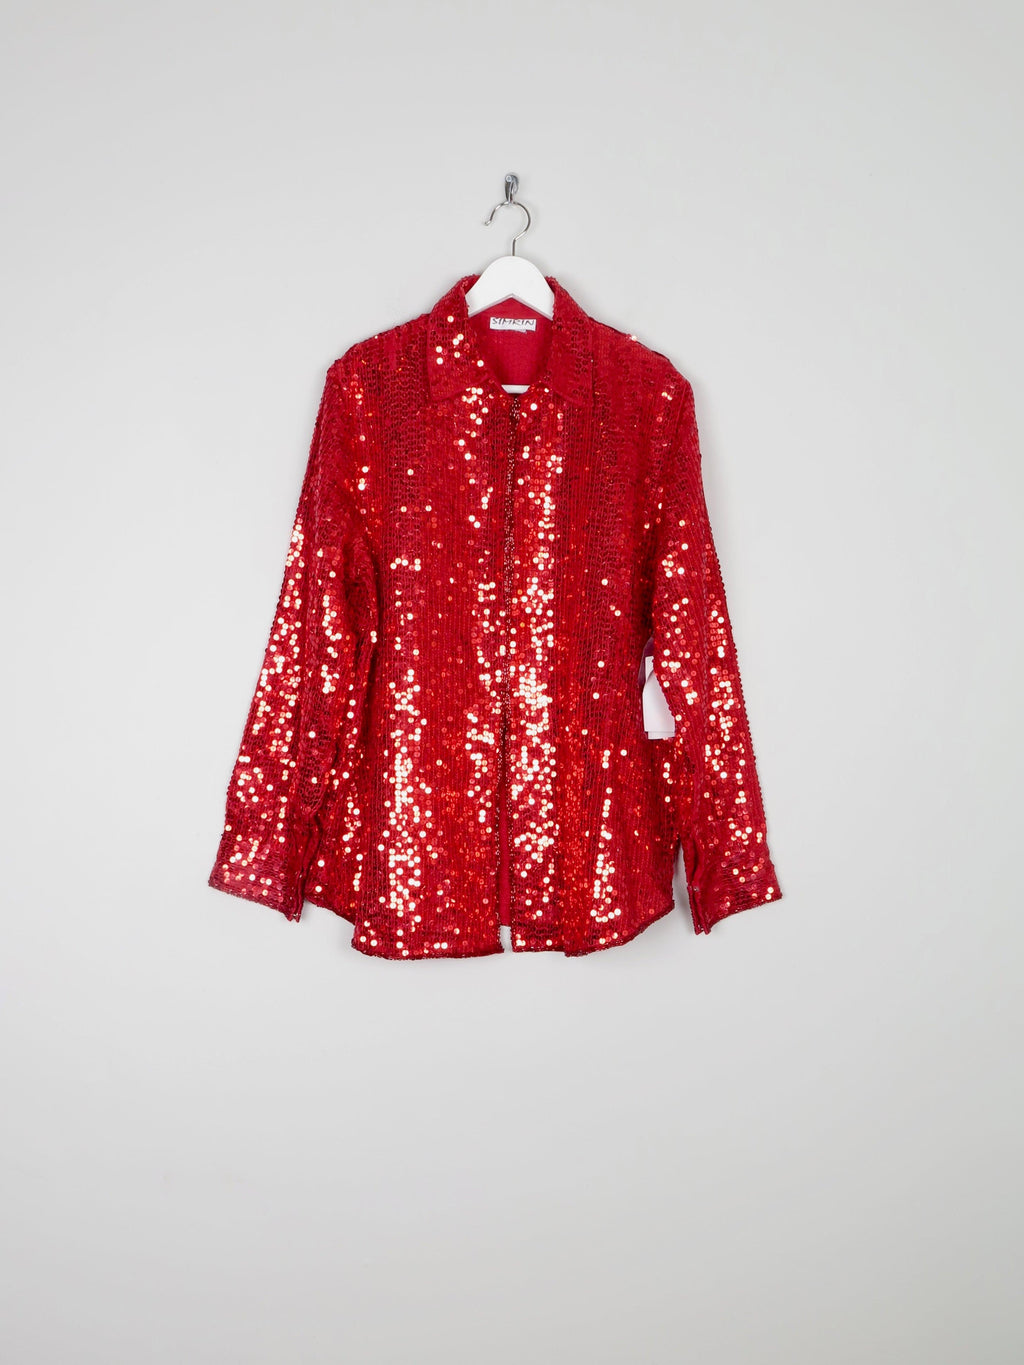 Red Sequin Vintage Shirt/Blouse M/L - The Harlequin